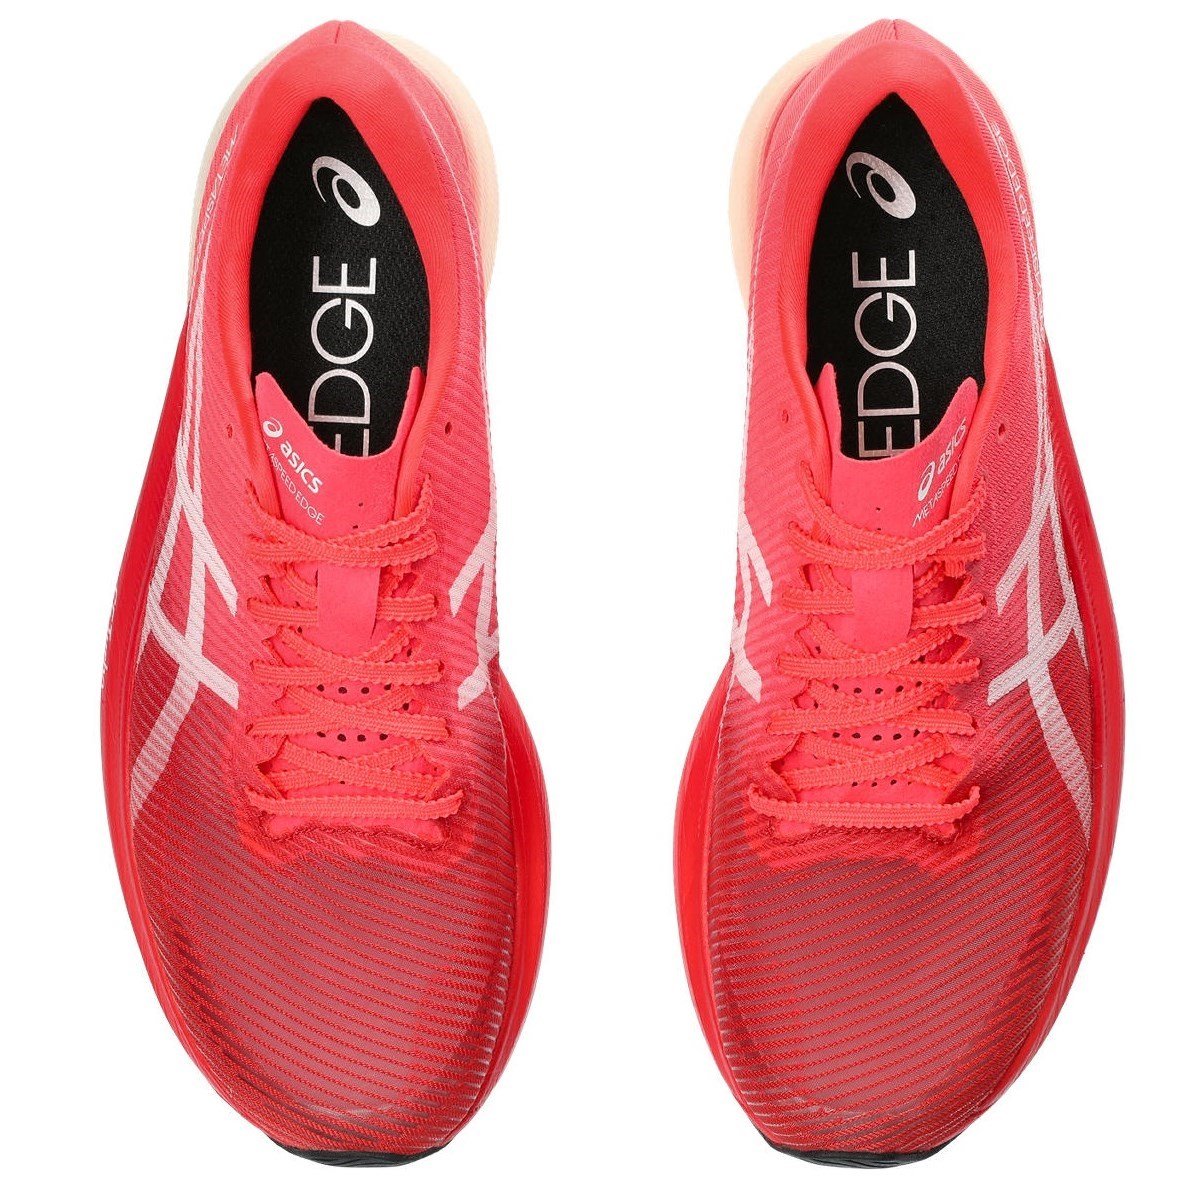 Asics MetaSpeed Edge+ - Unisex Road Racing Shoes - Diva Pink/White ...